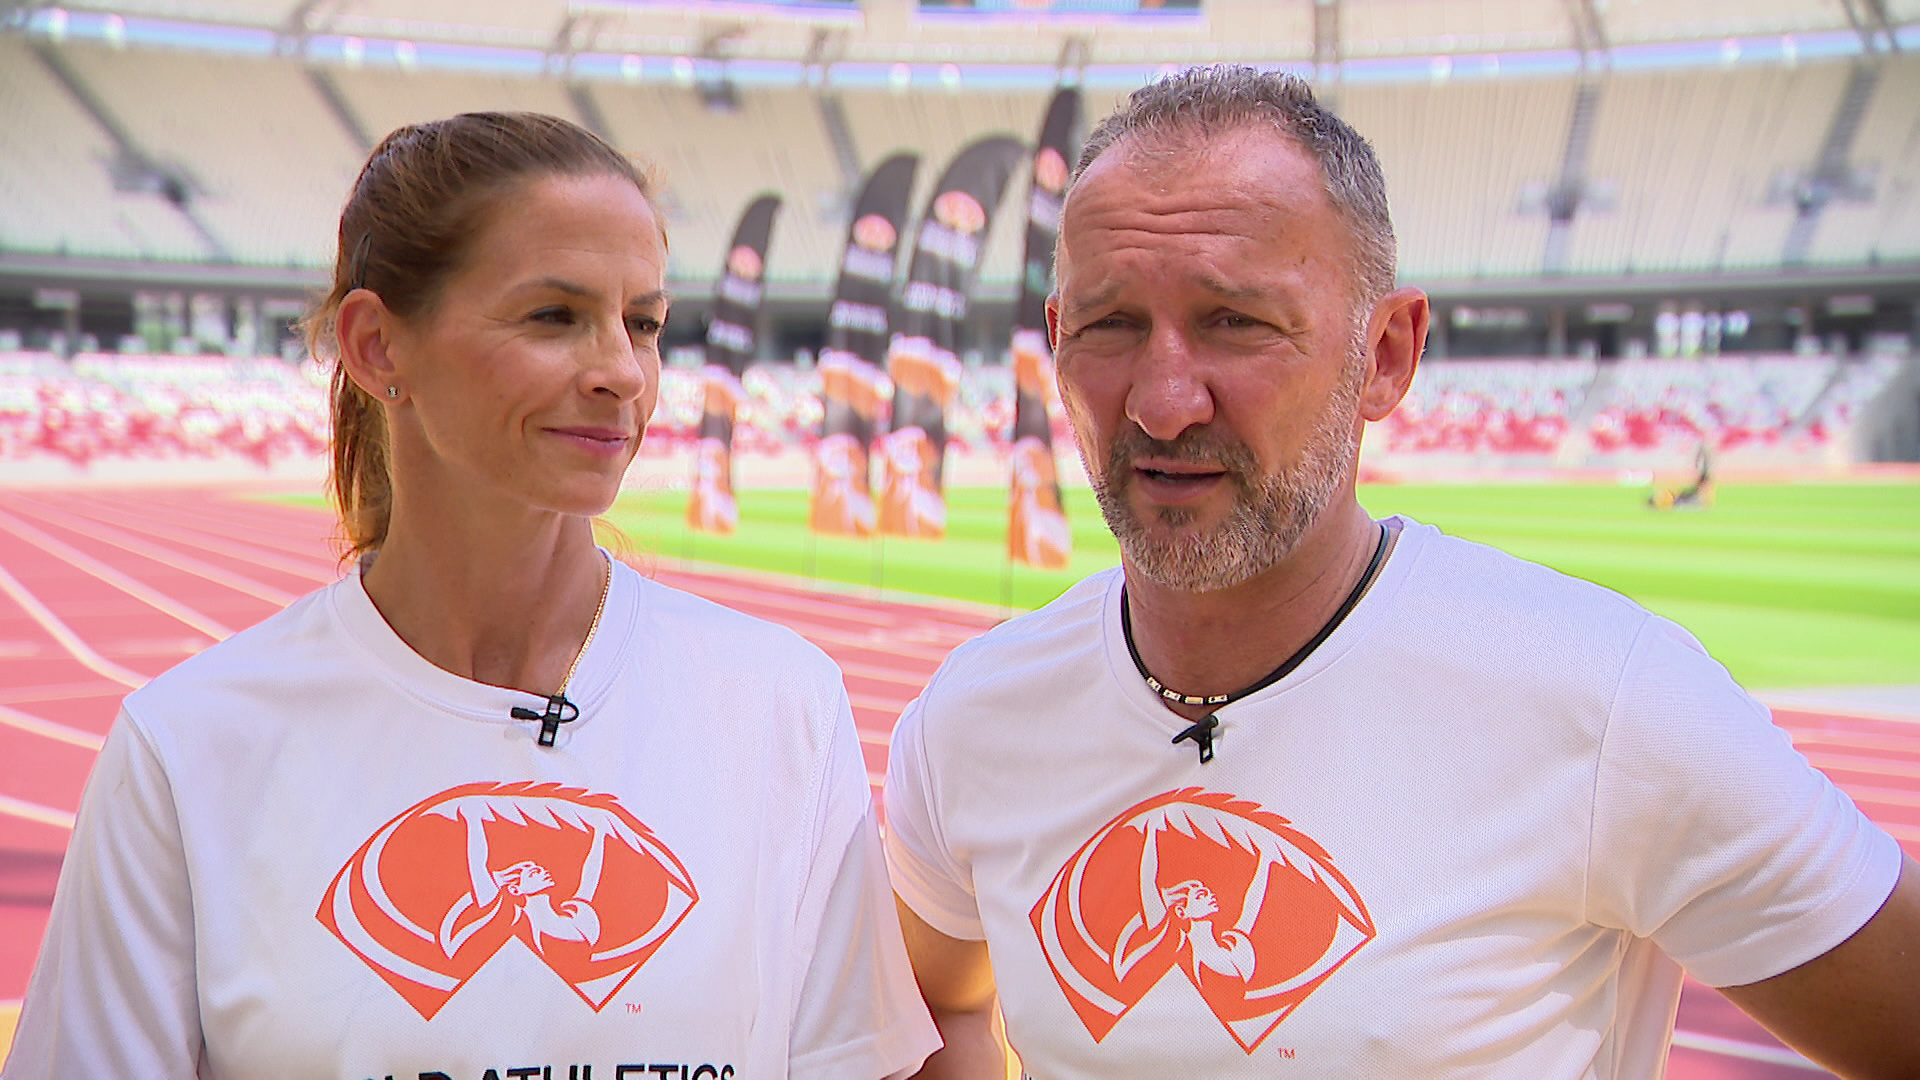 Radar - Kokó felesége is indul a budapesti atlétikai világbajnokságon